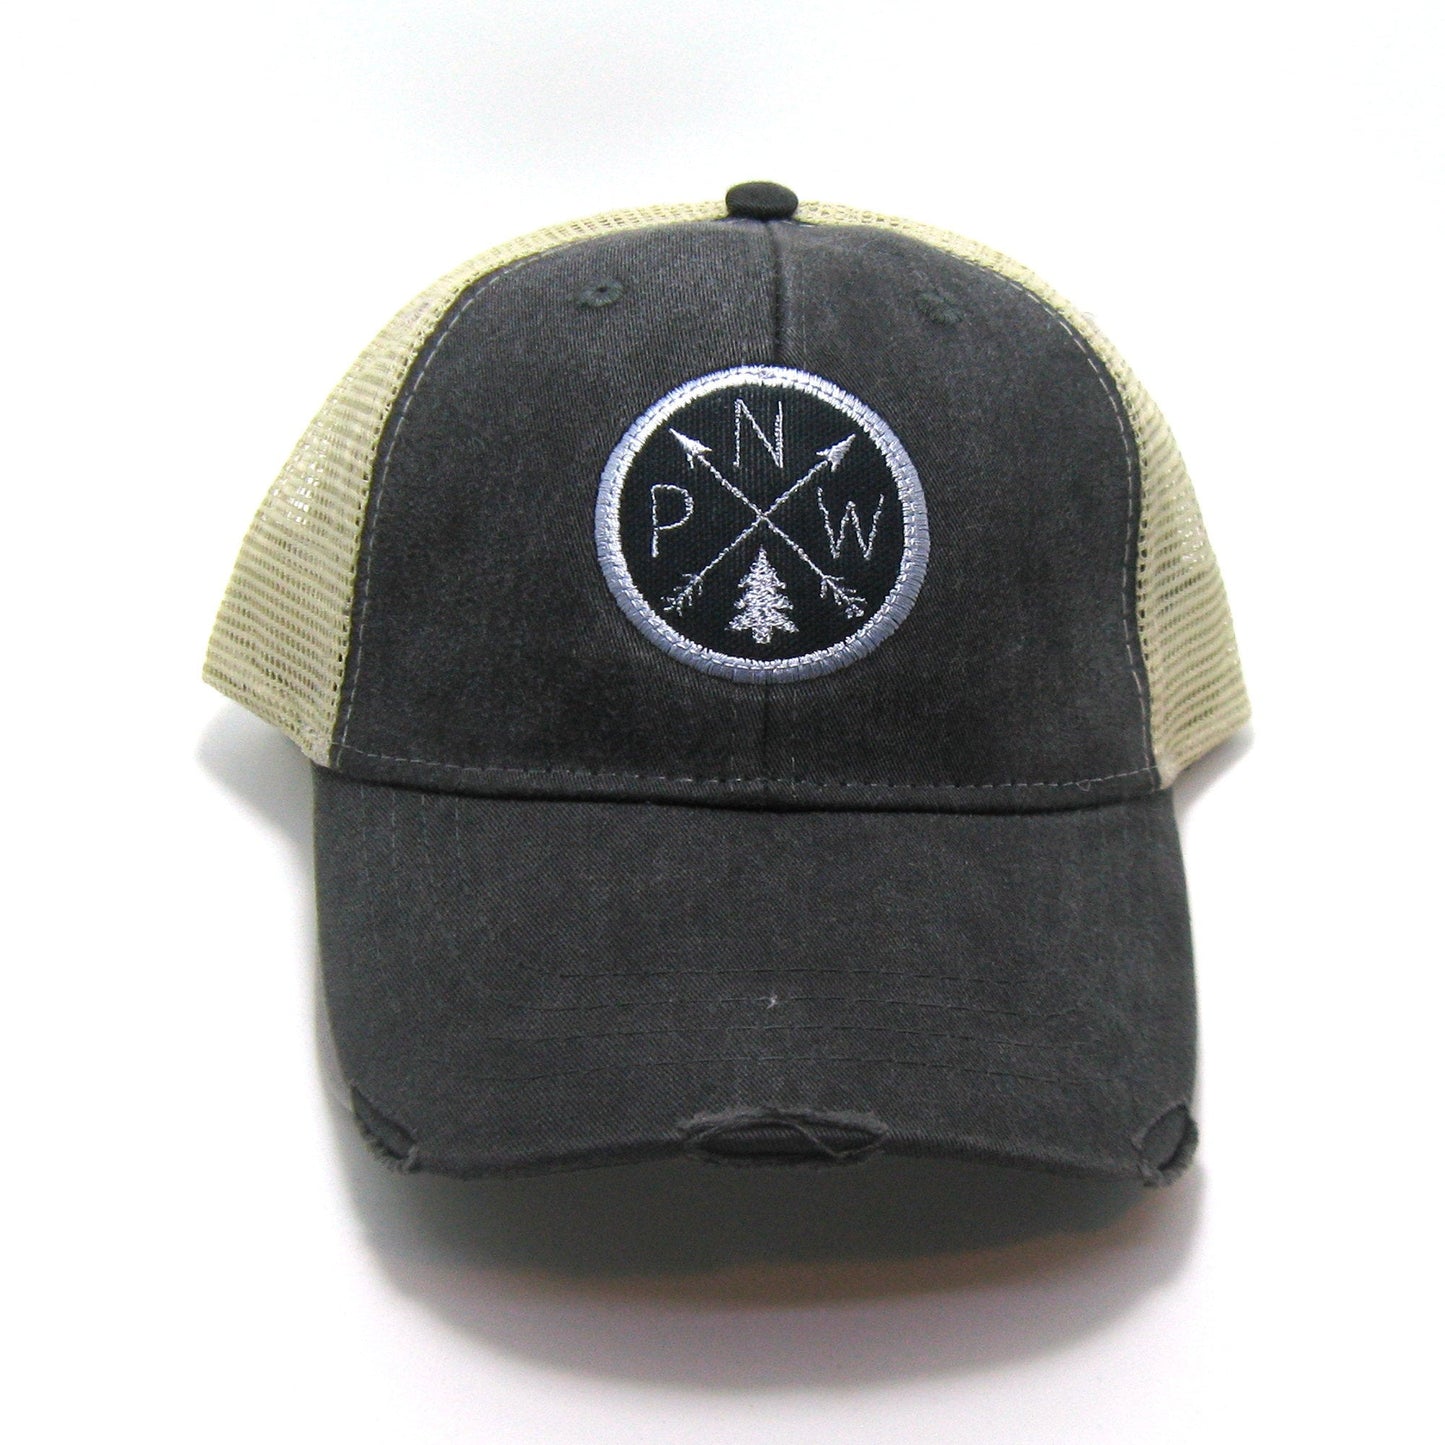 Pacific Northwest Hat - Black Distressed Snapback Trucker Hat - PNW Arrow Compass